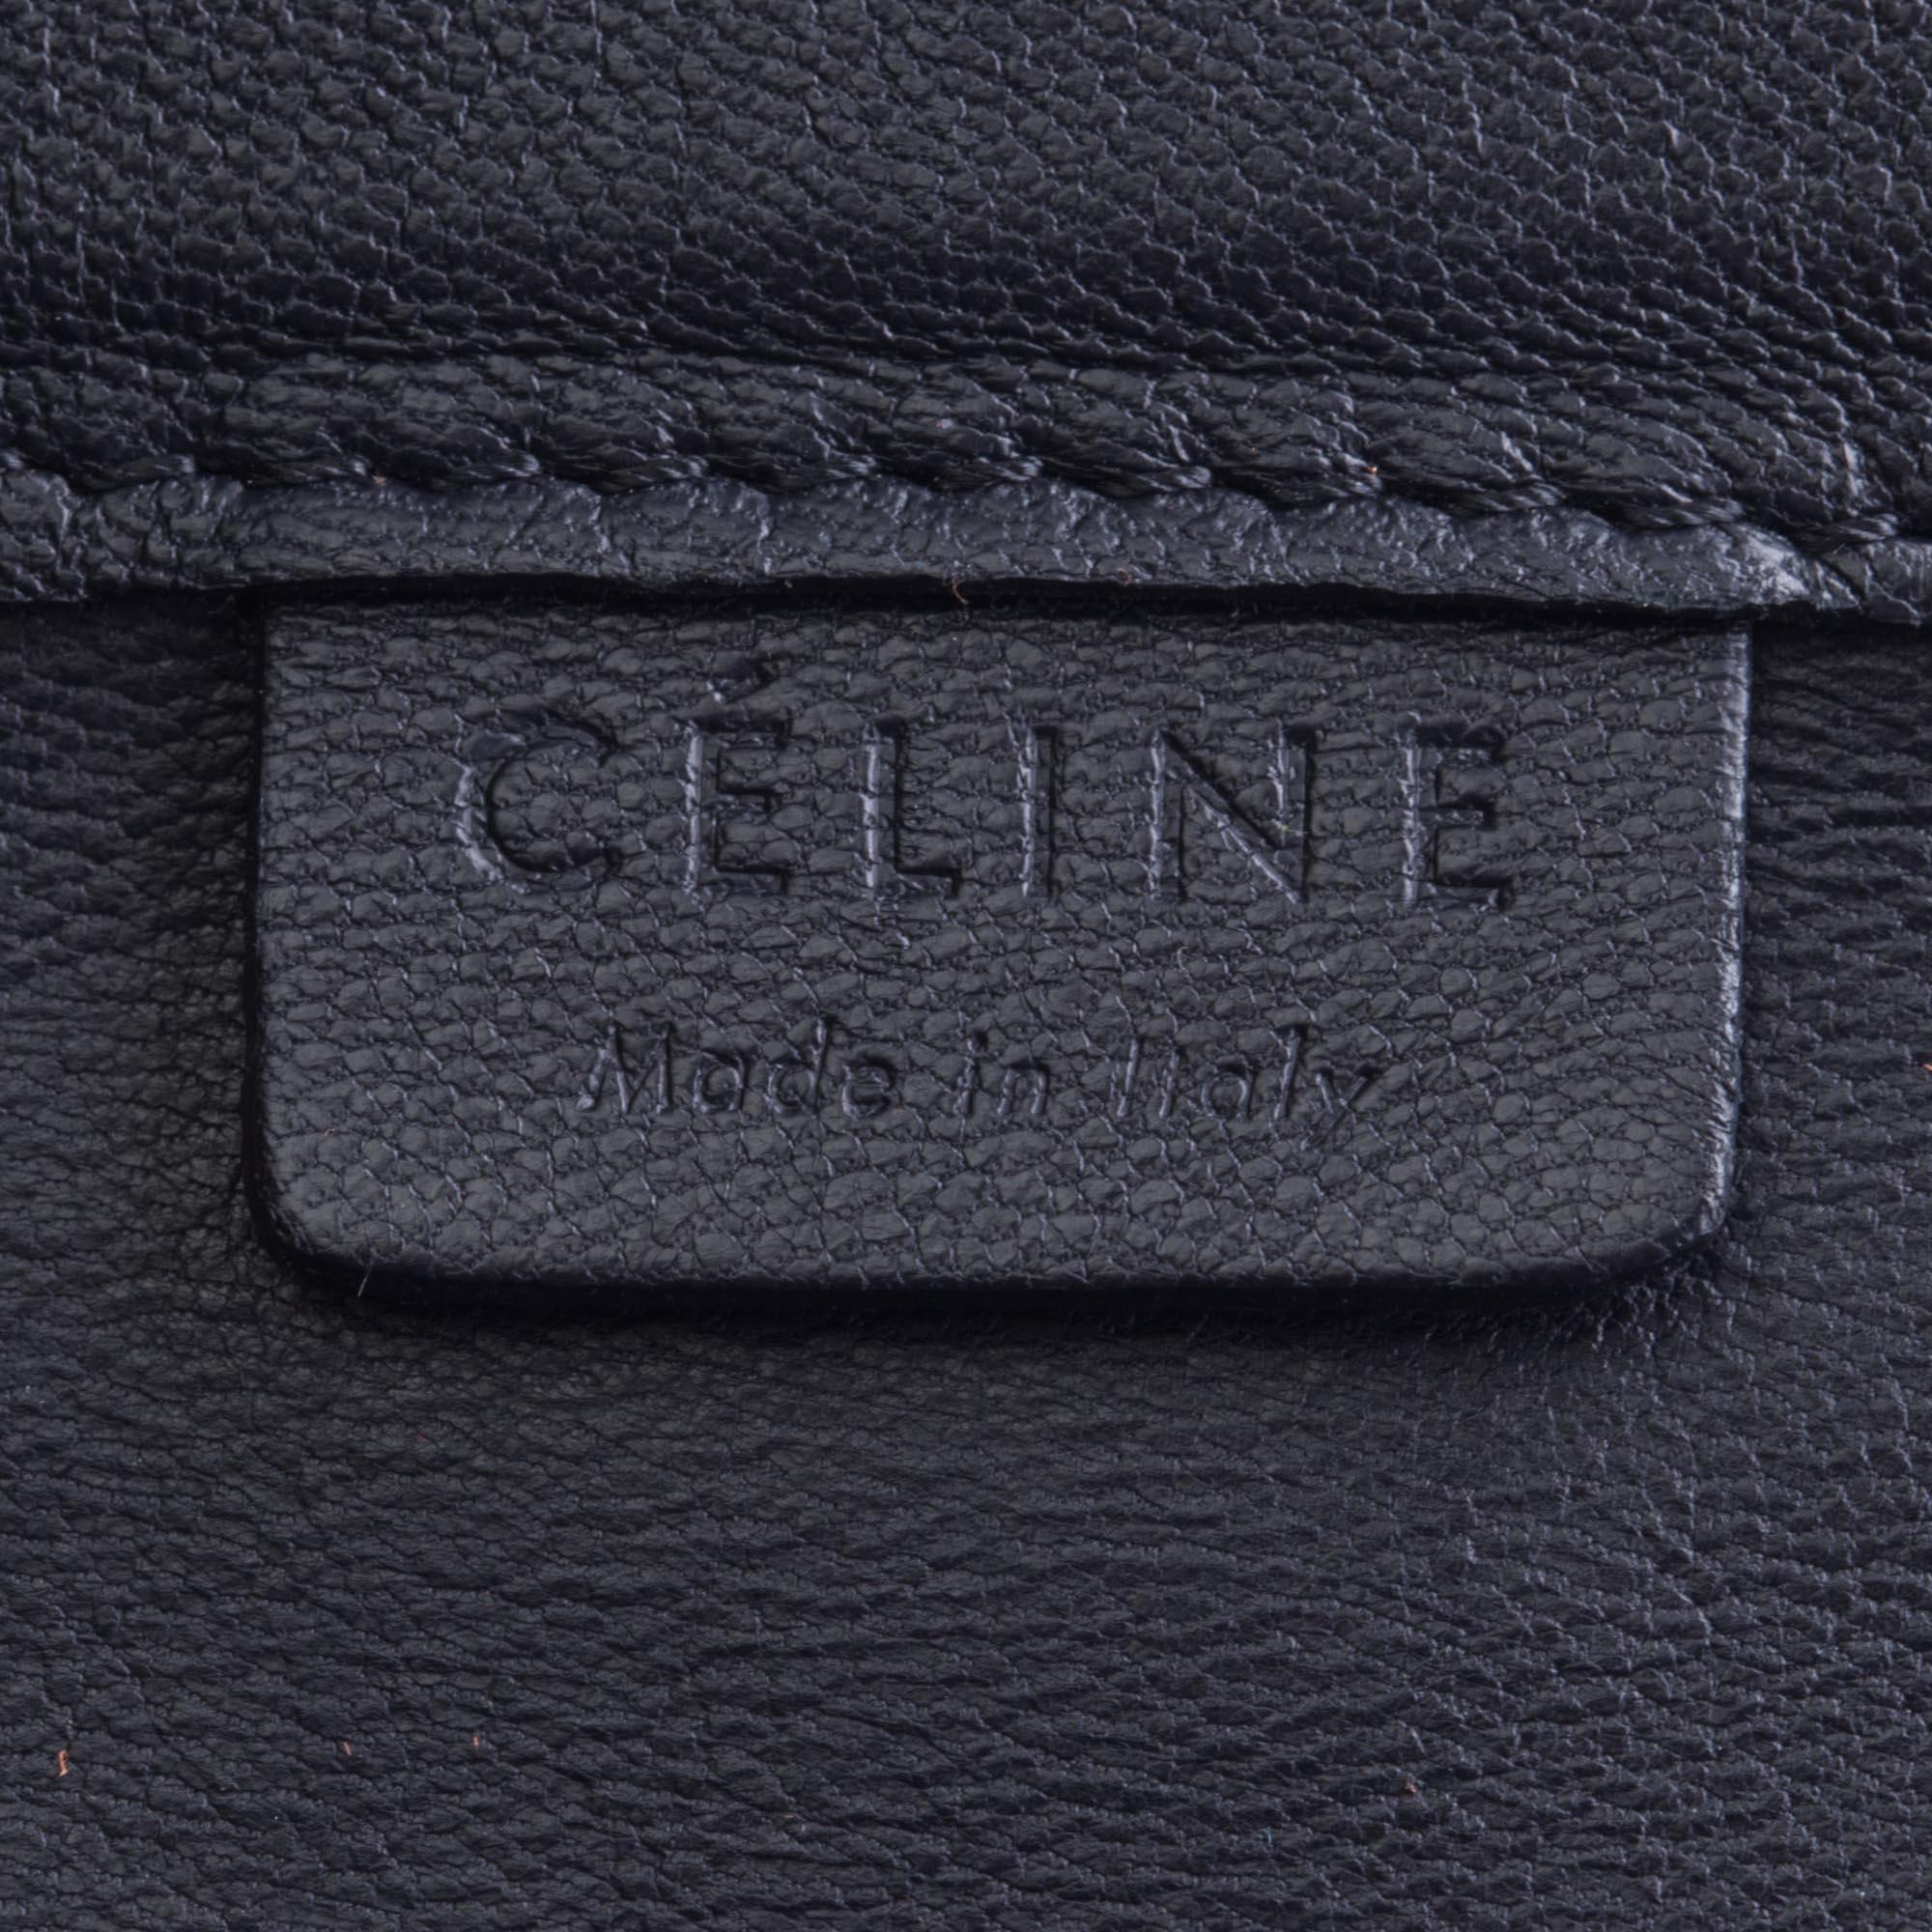 Vintage Authentic Celine Black Leather Bicolor Vertical Cabas Tote FRANCE LARGE  For Sale 2